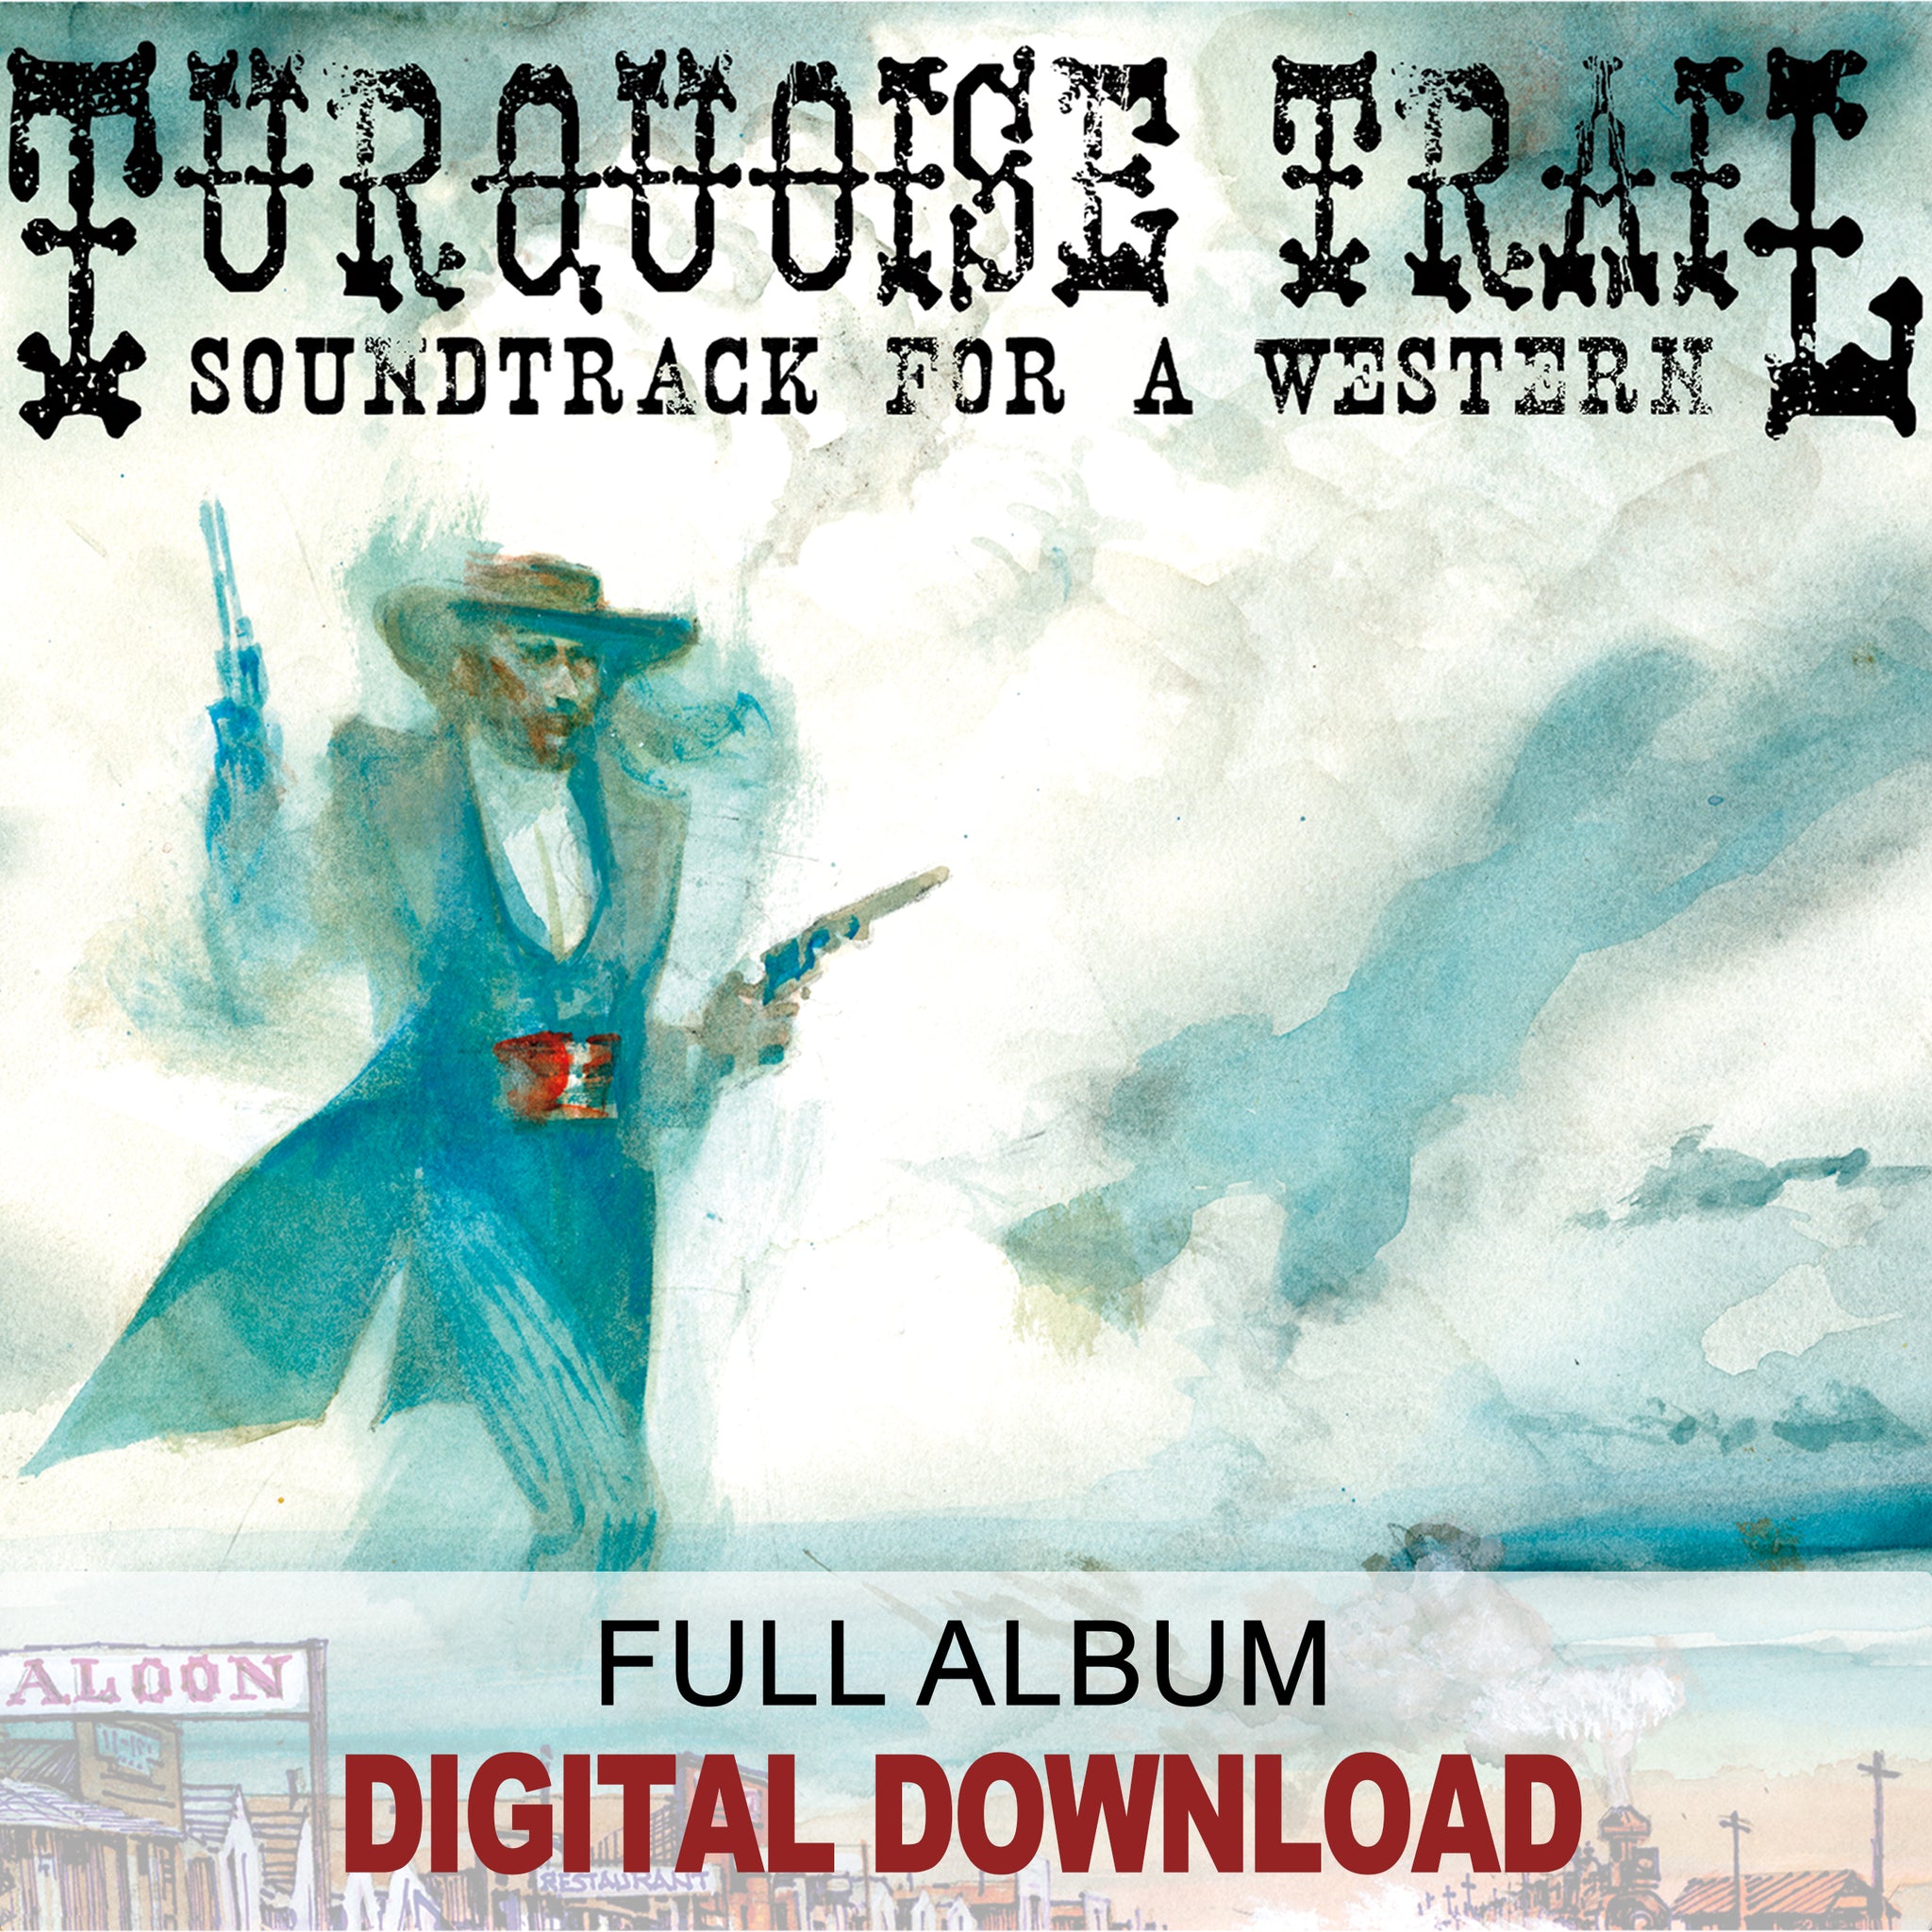 “Turquoise Trail: Soundtrack for a Western" Double Album (DIGITAL ALBUM)